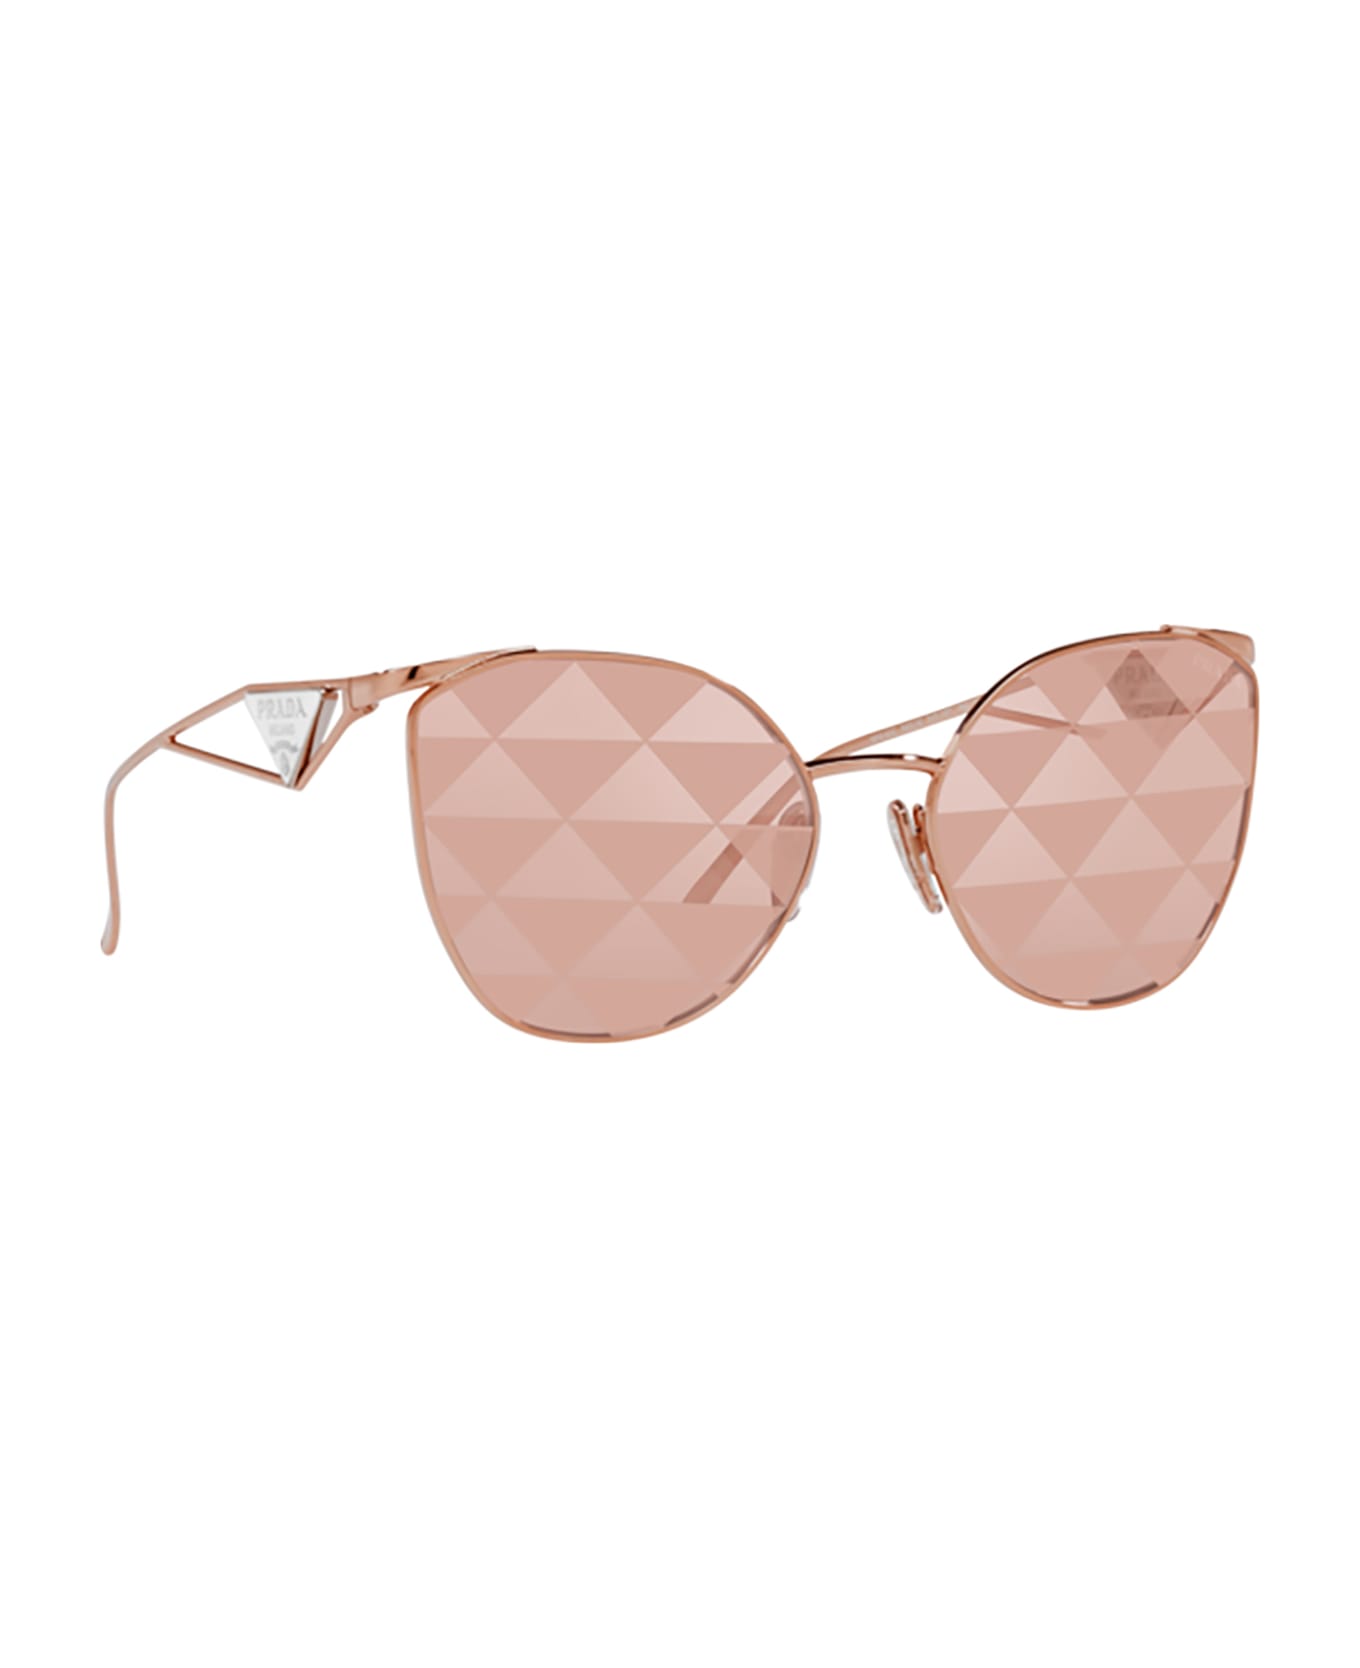 Prada Eyewear Pr 50zs Pink Gold Sunglasses - Pink Gold サングラス